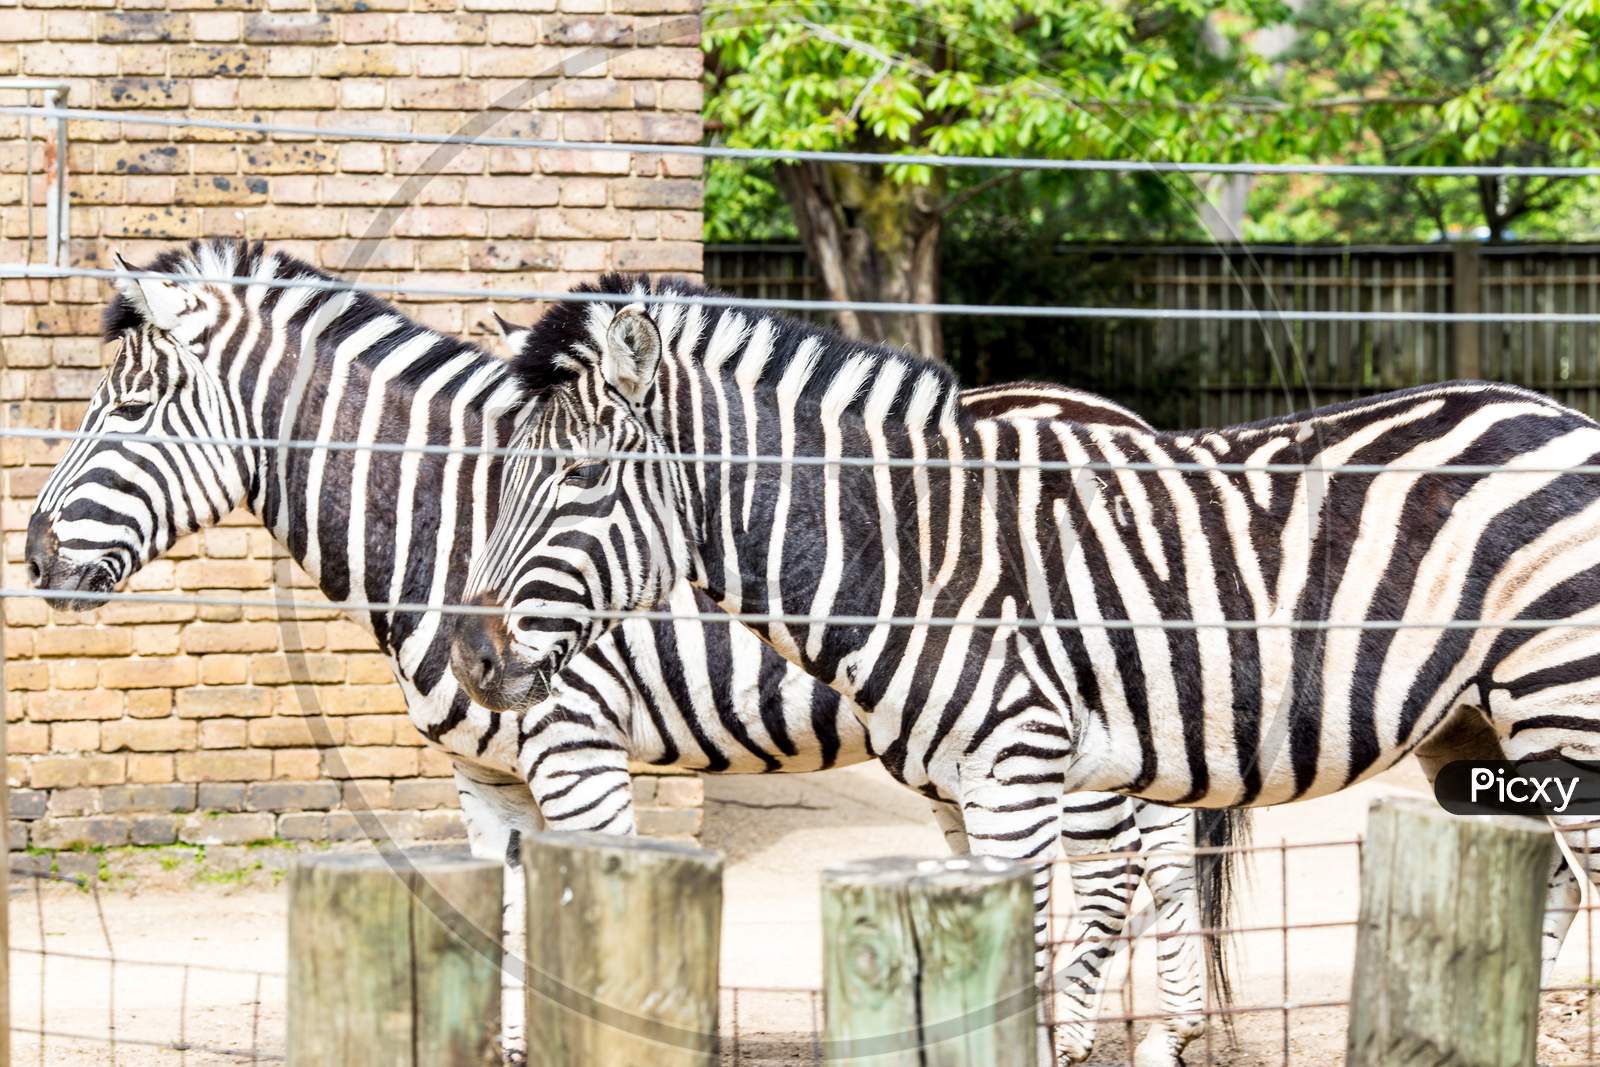 Amazing Zebras in the Zoo